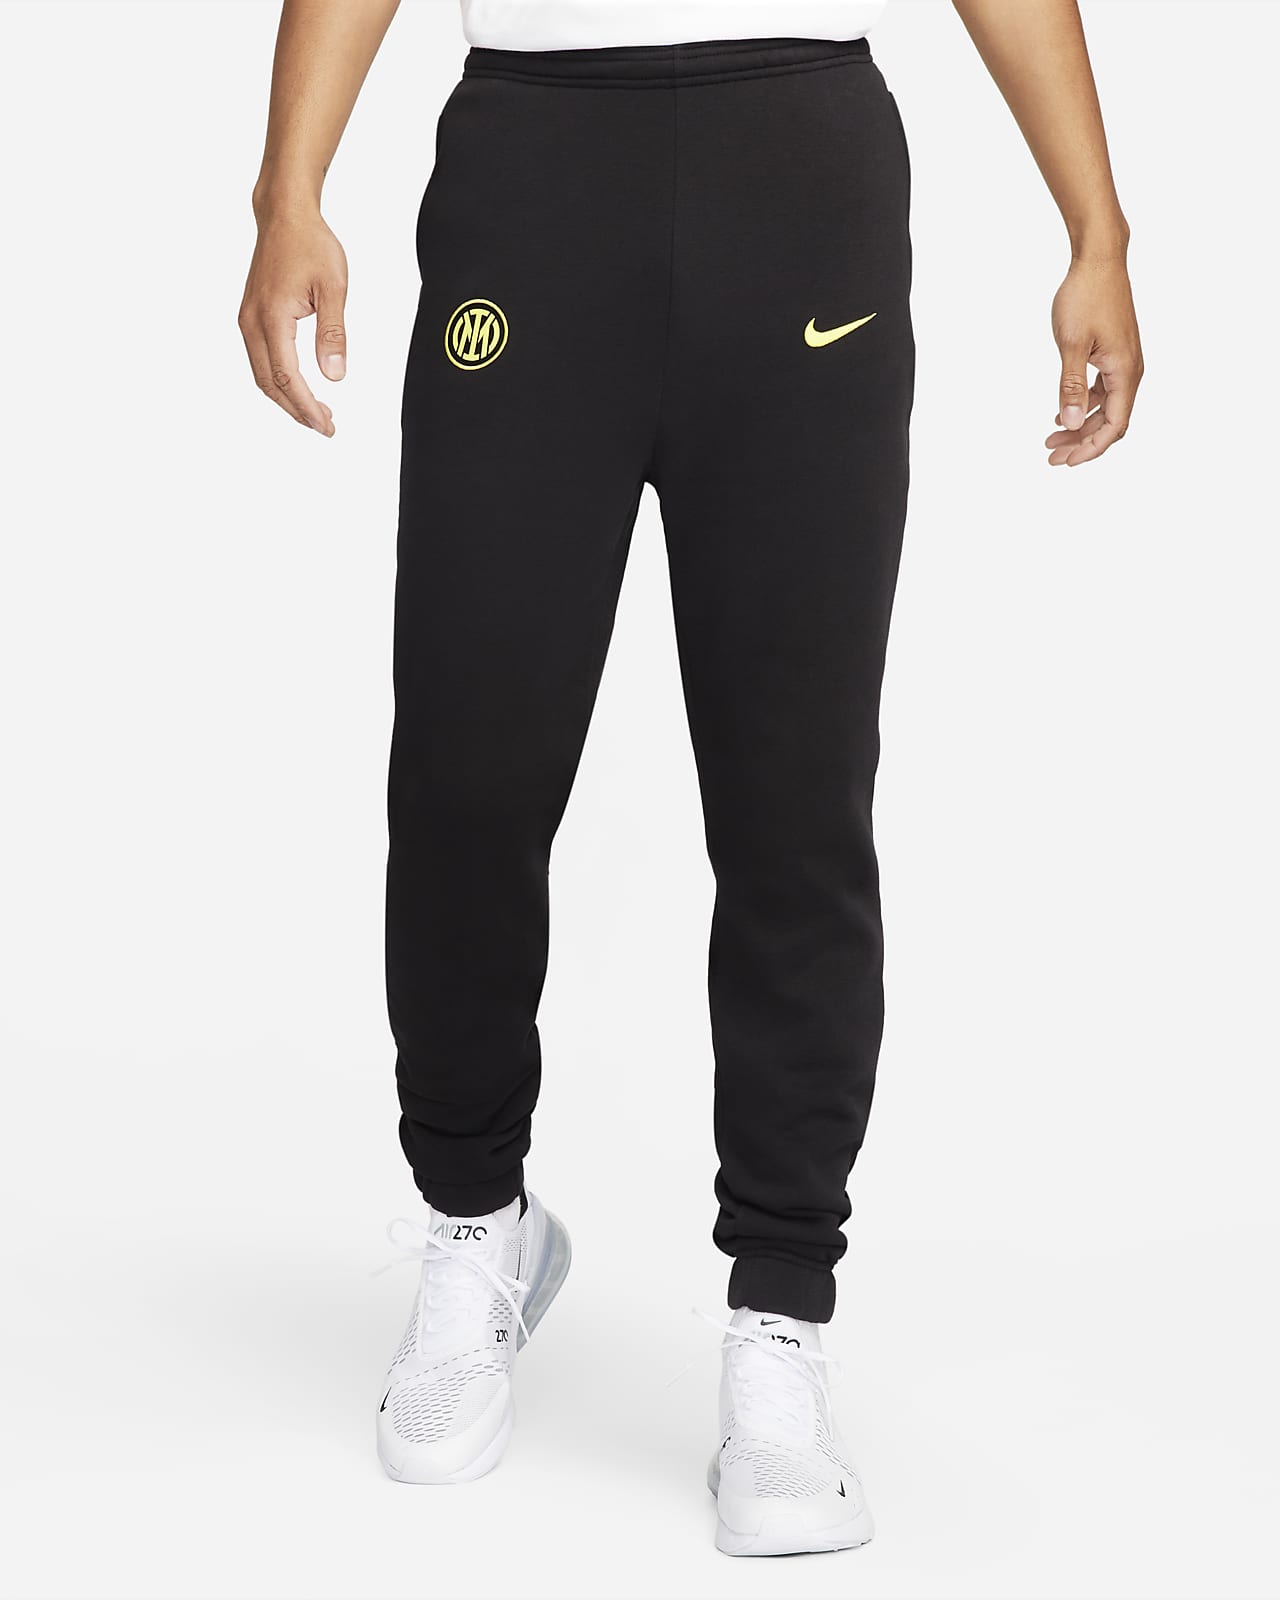 Inter Milan Men's Nike Fleece Football Trousers